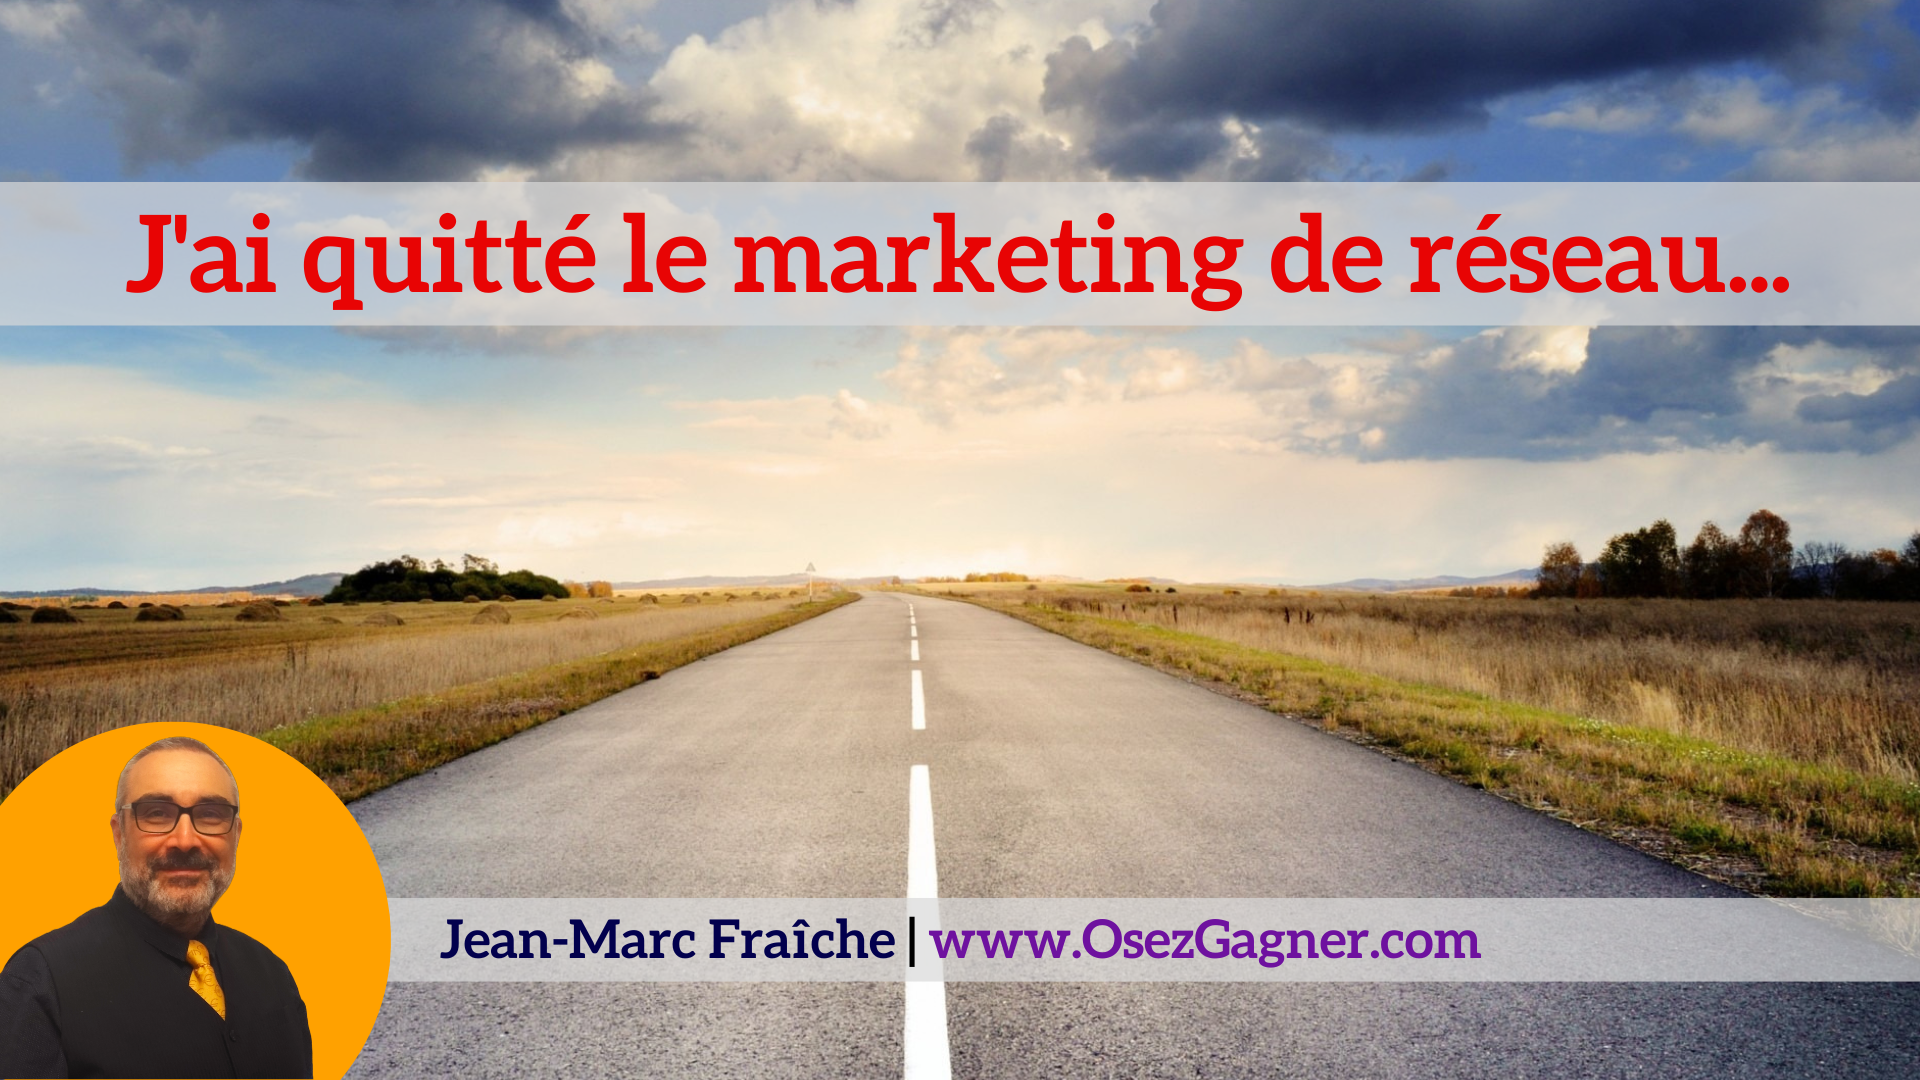 j-ai-quiite-le-marketing-de-reseau-Jean-Marc-Fraiche-OsezGagner.com